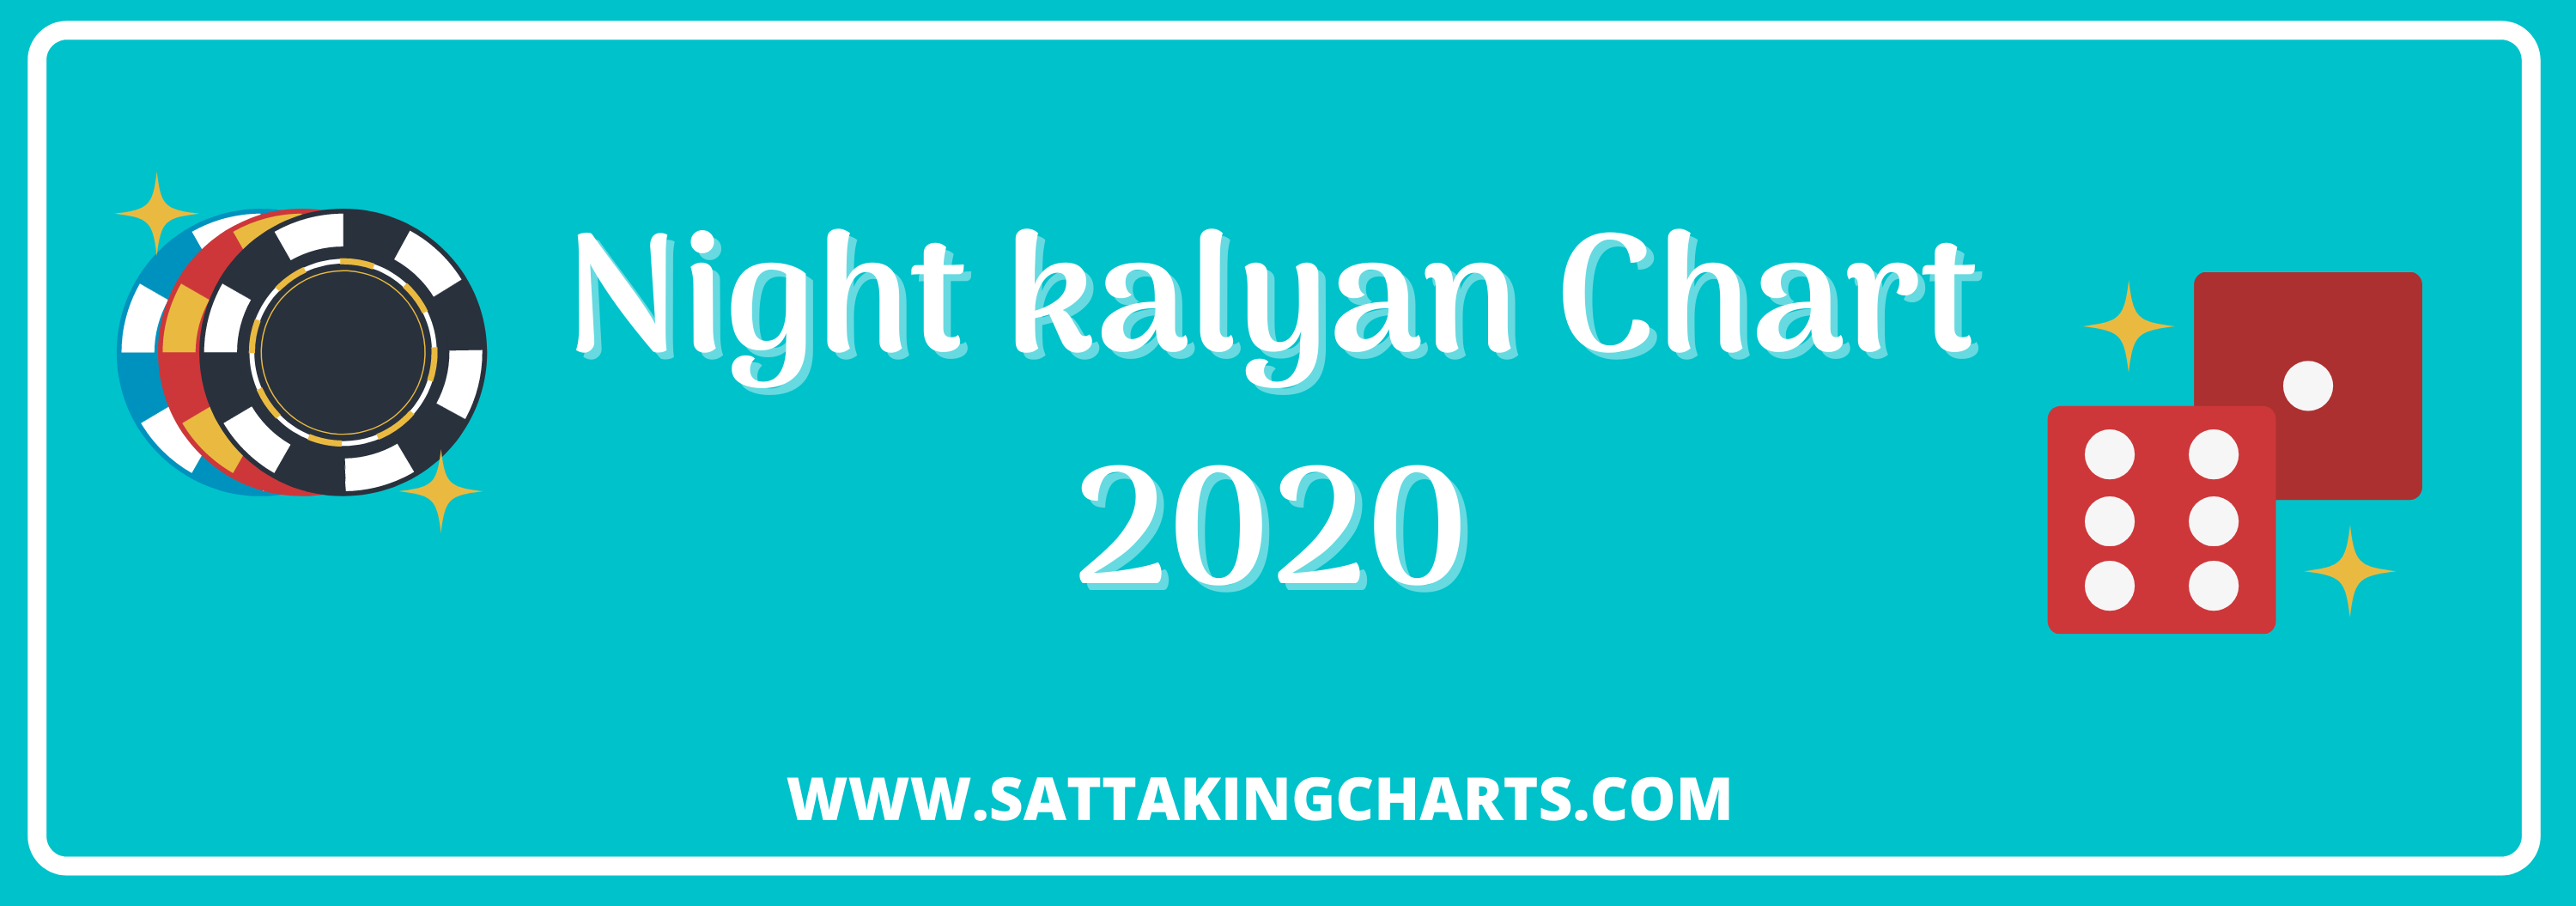 Night kalyan Chart 2020